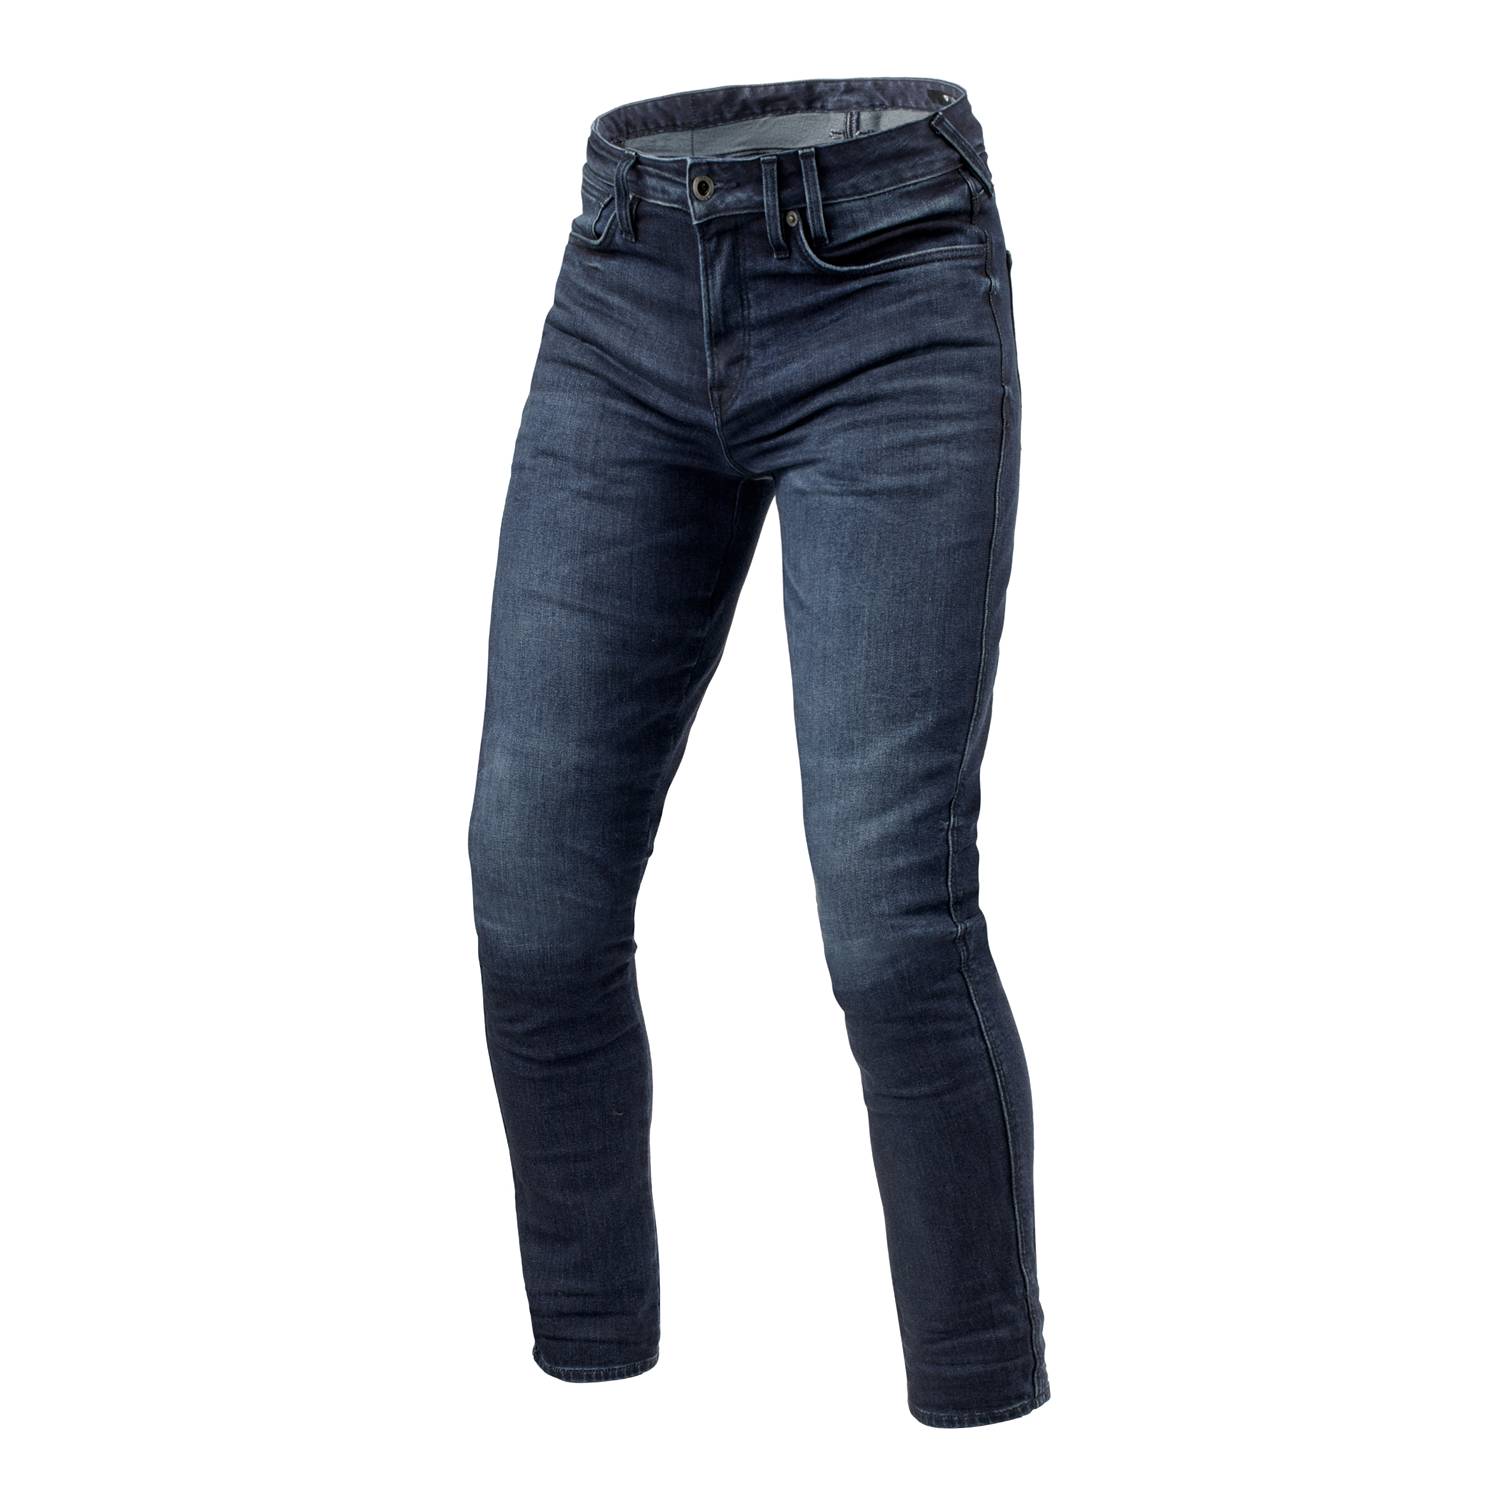 Image of REV'IT! Jeans Carlin SK Dark Blue Used L34 Motorcycle Jeans Größe L34/W33